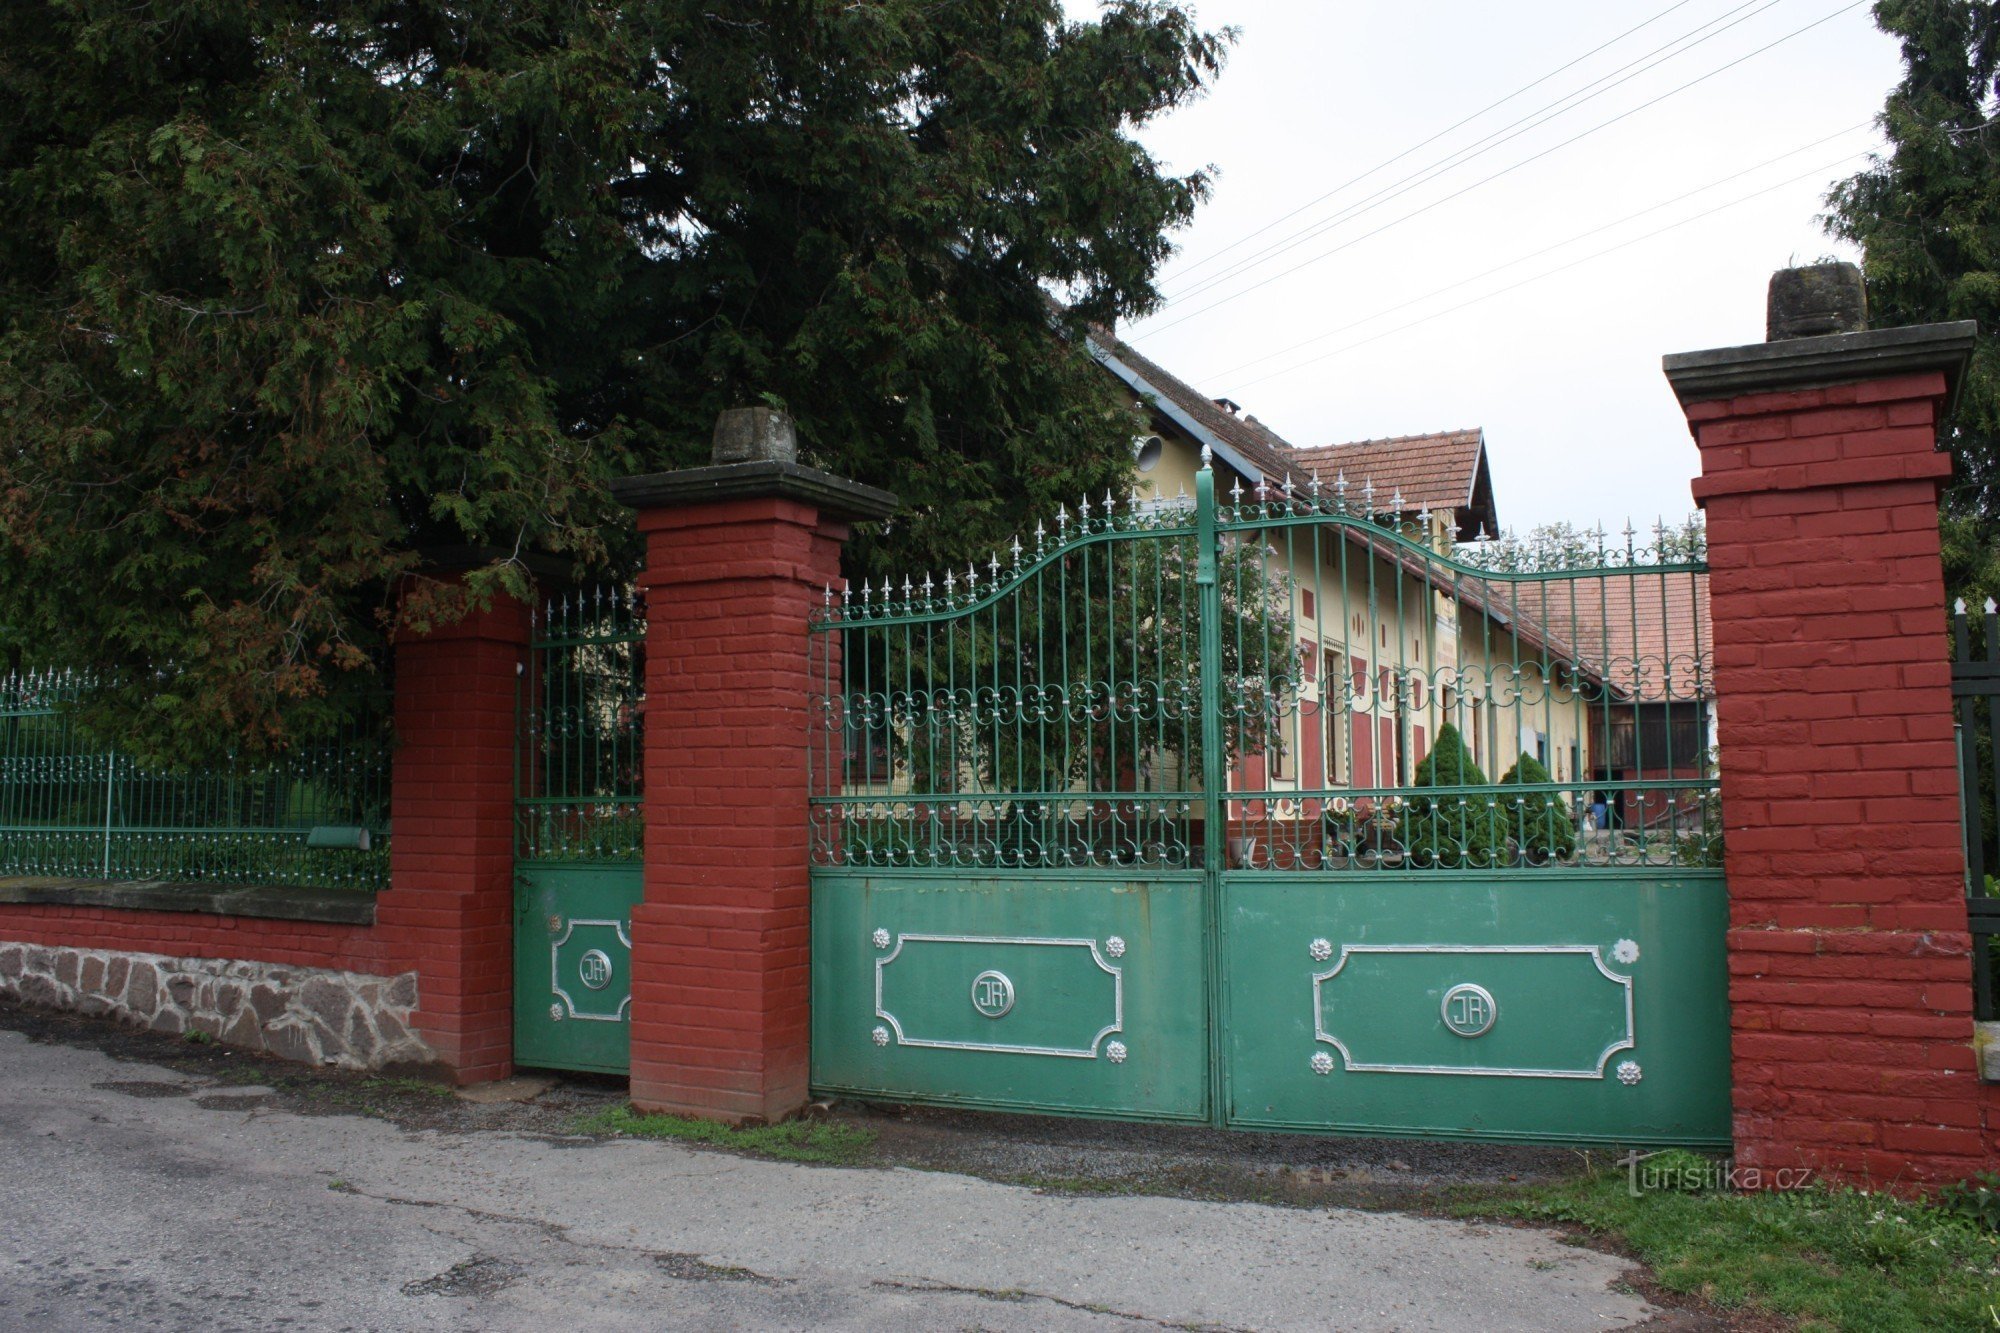 Quinta Art Nouveau na aldeia de Loučky perto de Slatiňan